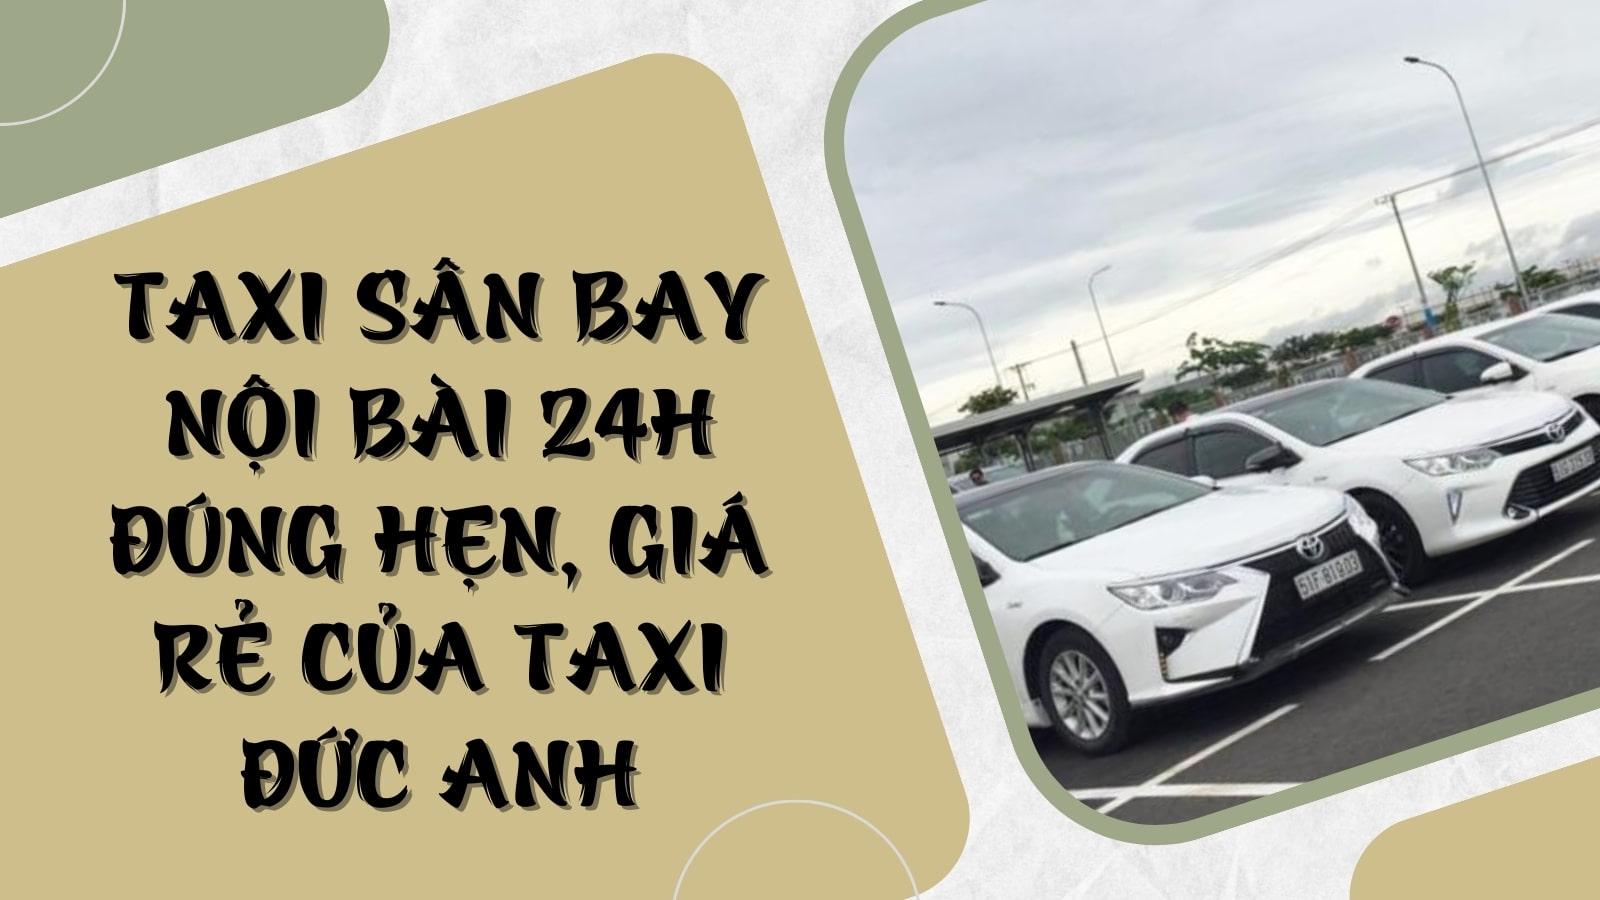 C:\Users\ADMIN\Downloads\taxi-san-bay-noi-bai-24h-dung-hen-gia-re-cua-taxi-duc-anh-min.jpg